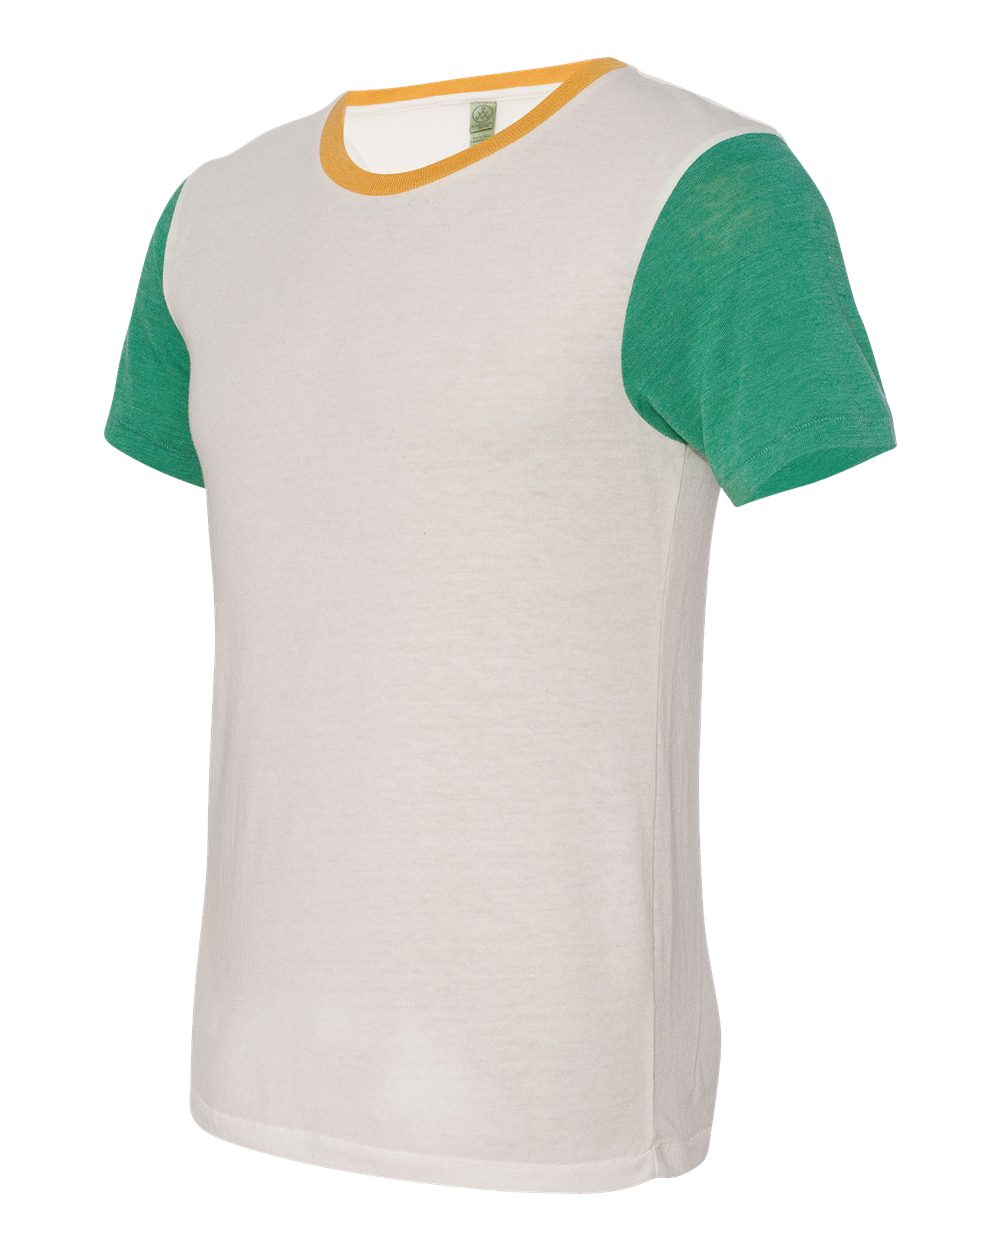 Alternative 1935e1 - Eco-Jersey Colorblock Crewneck T-Shirt